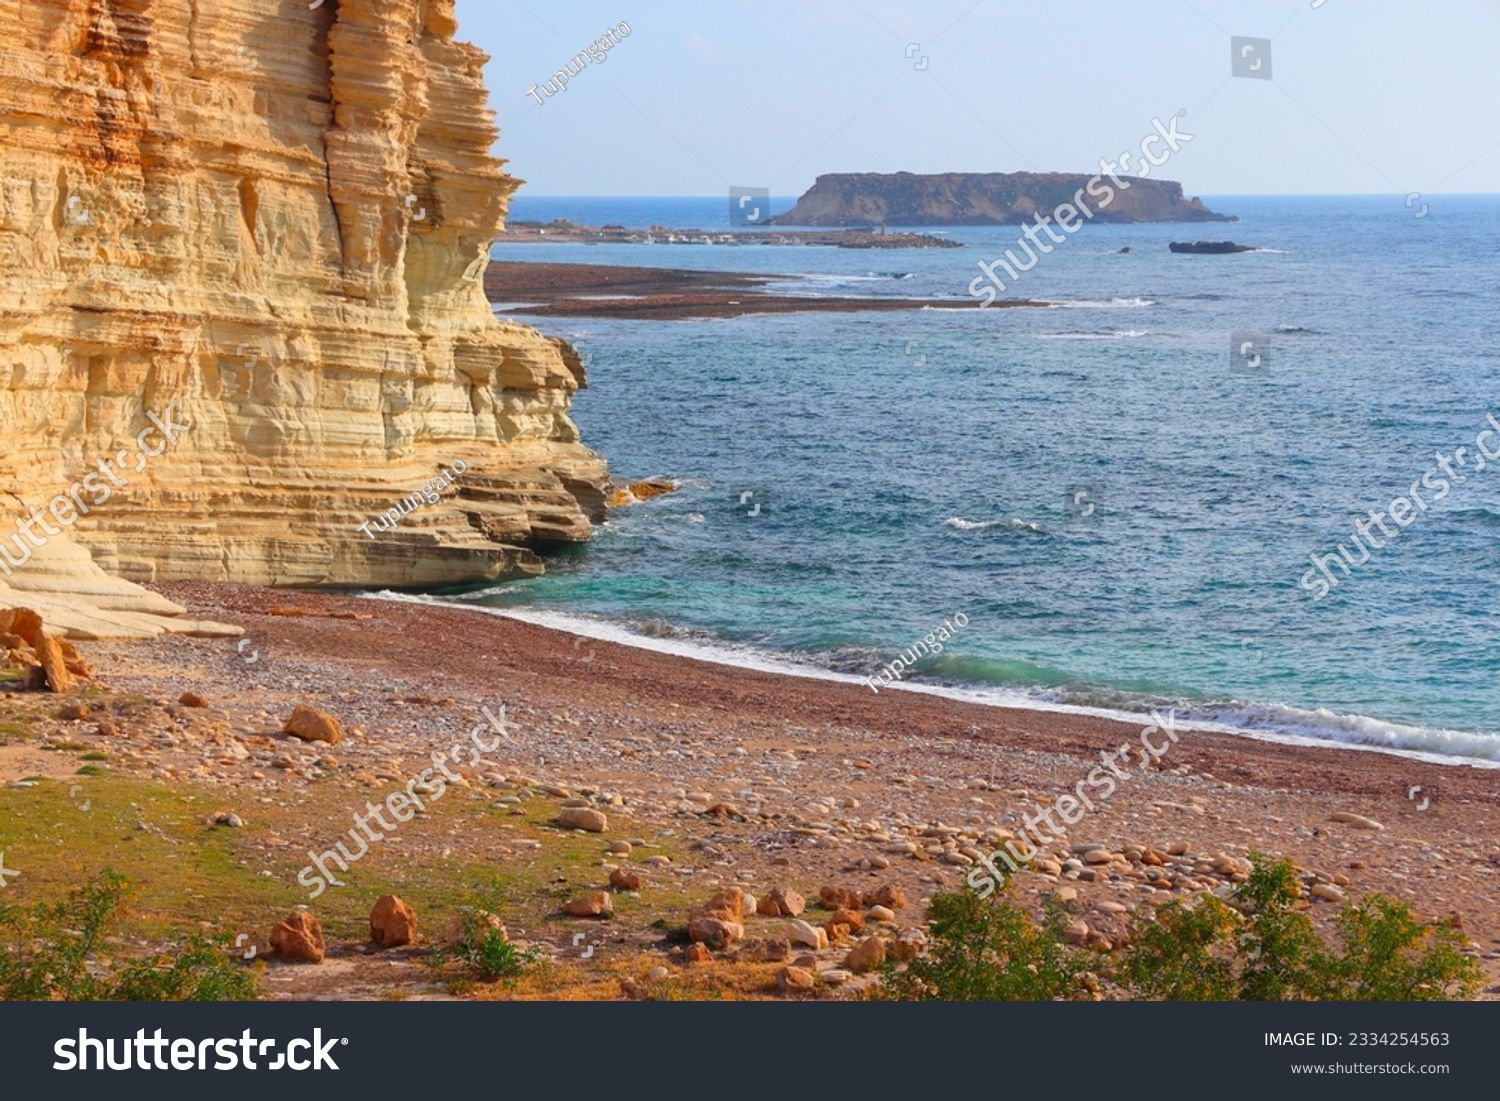 Cyprus - Mediterranean Sea coast. Lara Beach in Paphos district. #2334254563